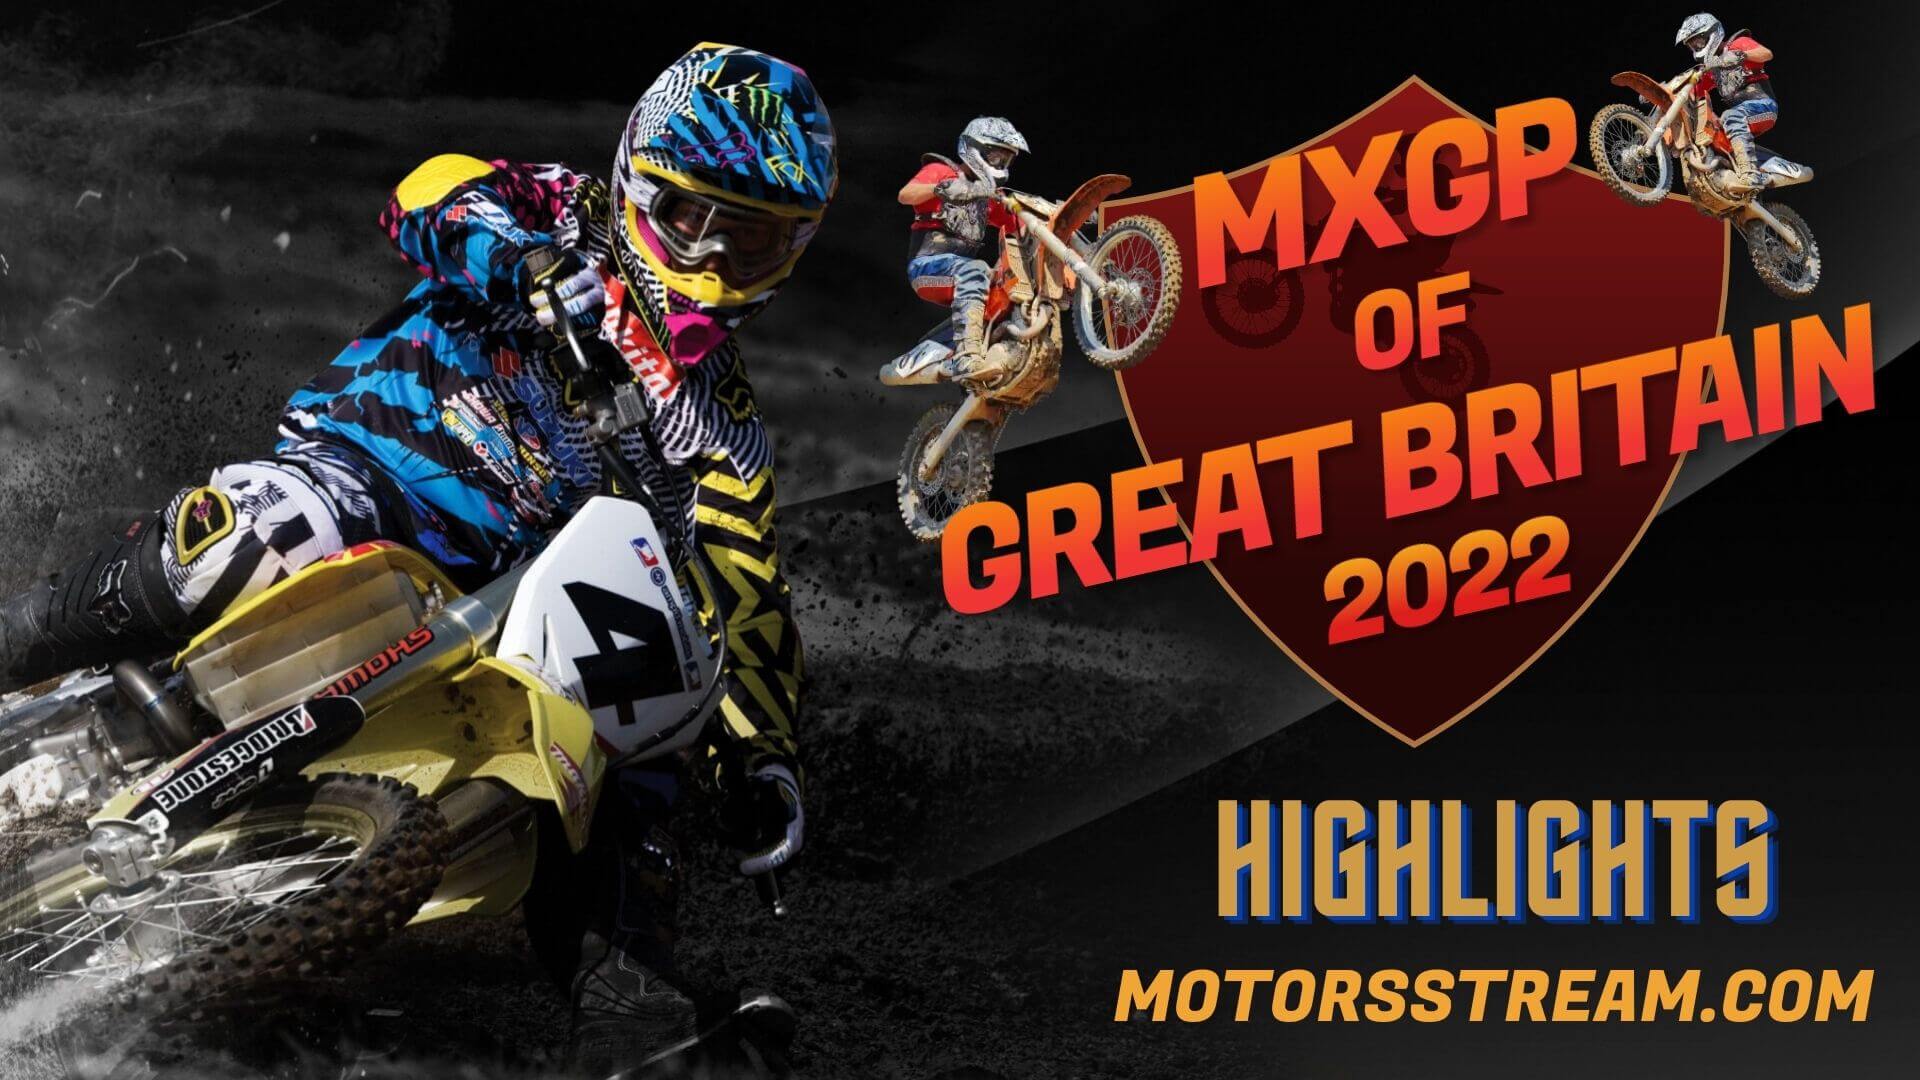 FIM Motocross Great Britain Highlights 2022 MXGP